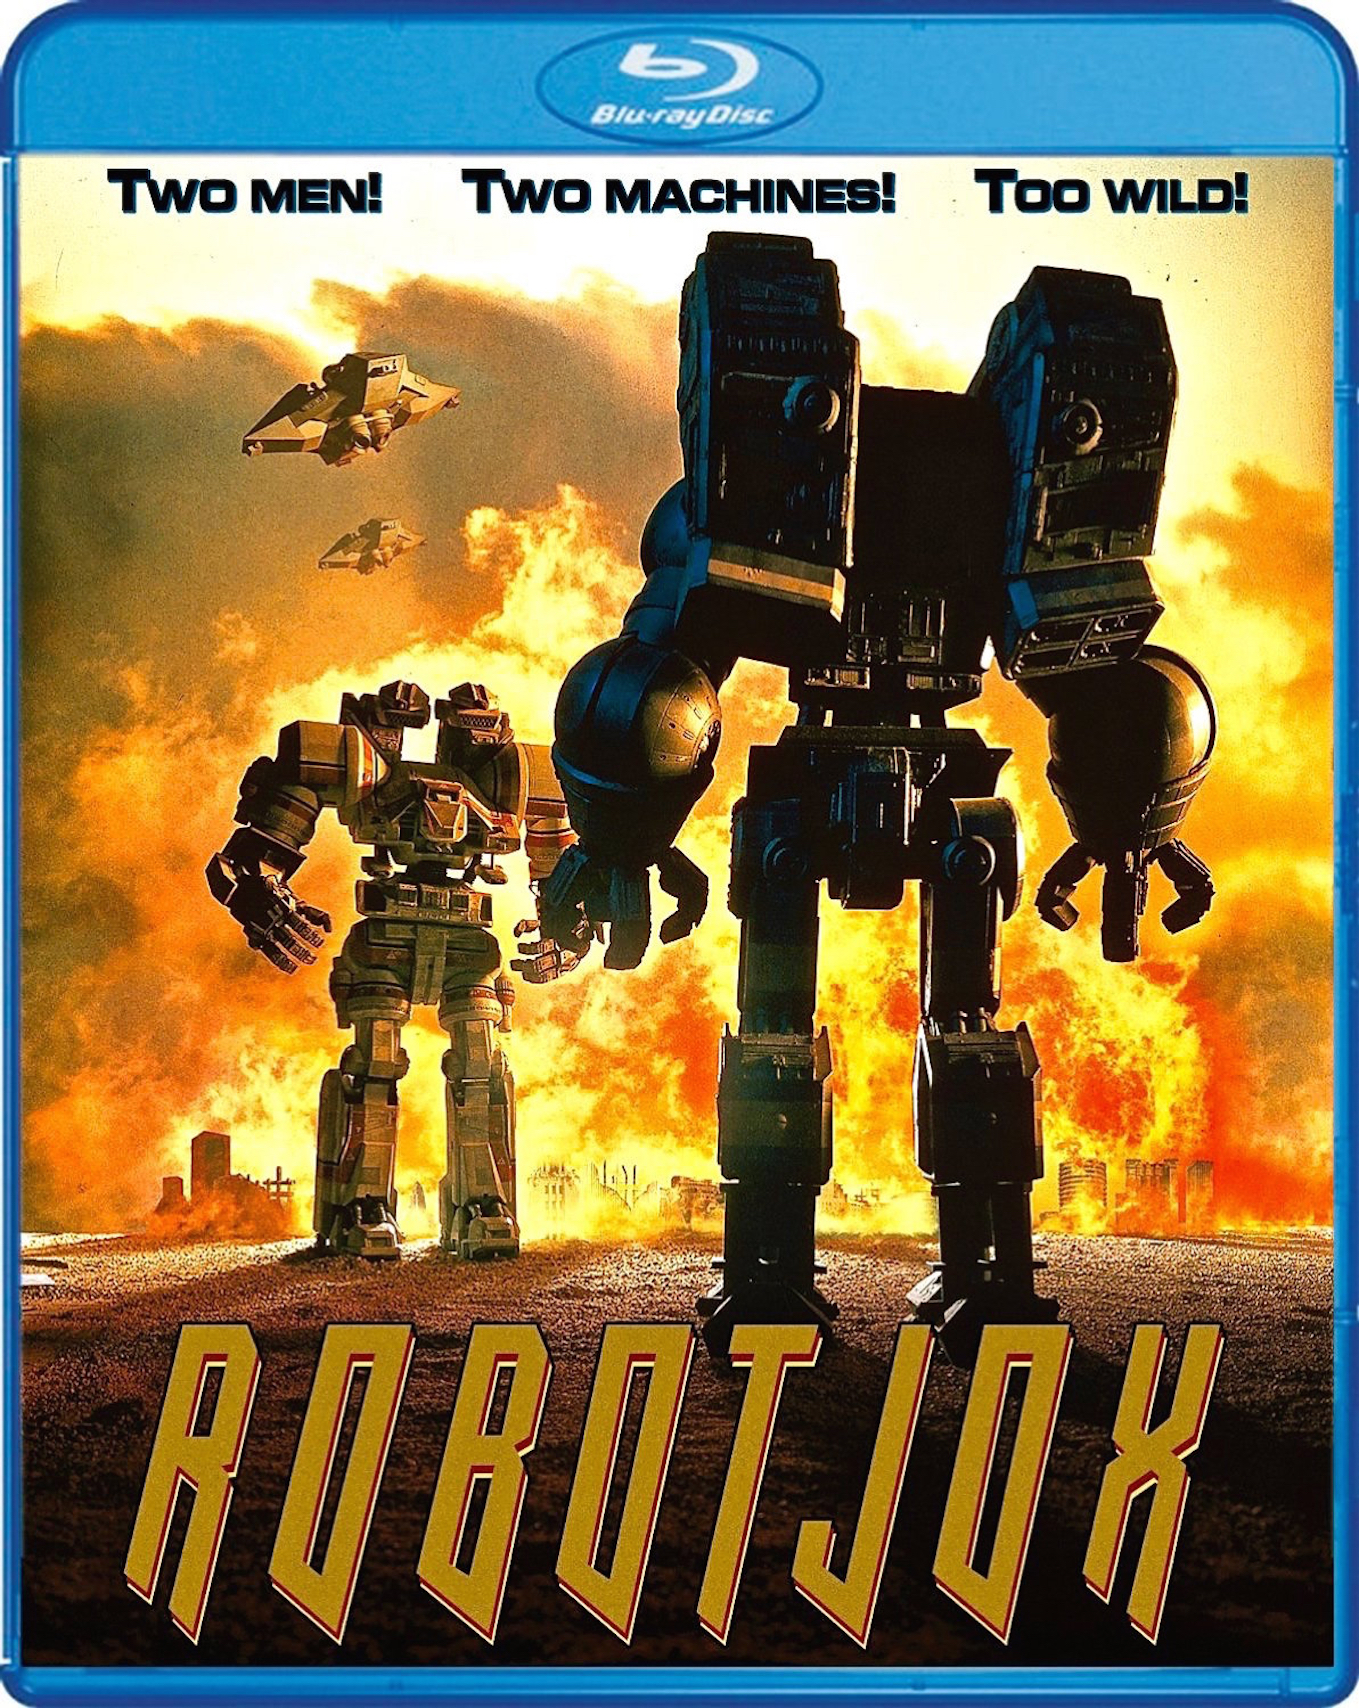 Robot Jox (1989)